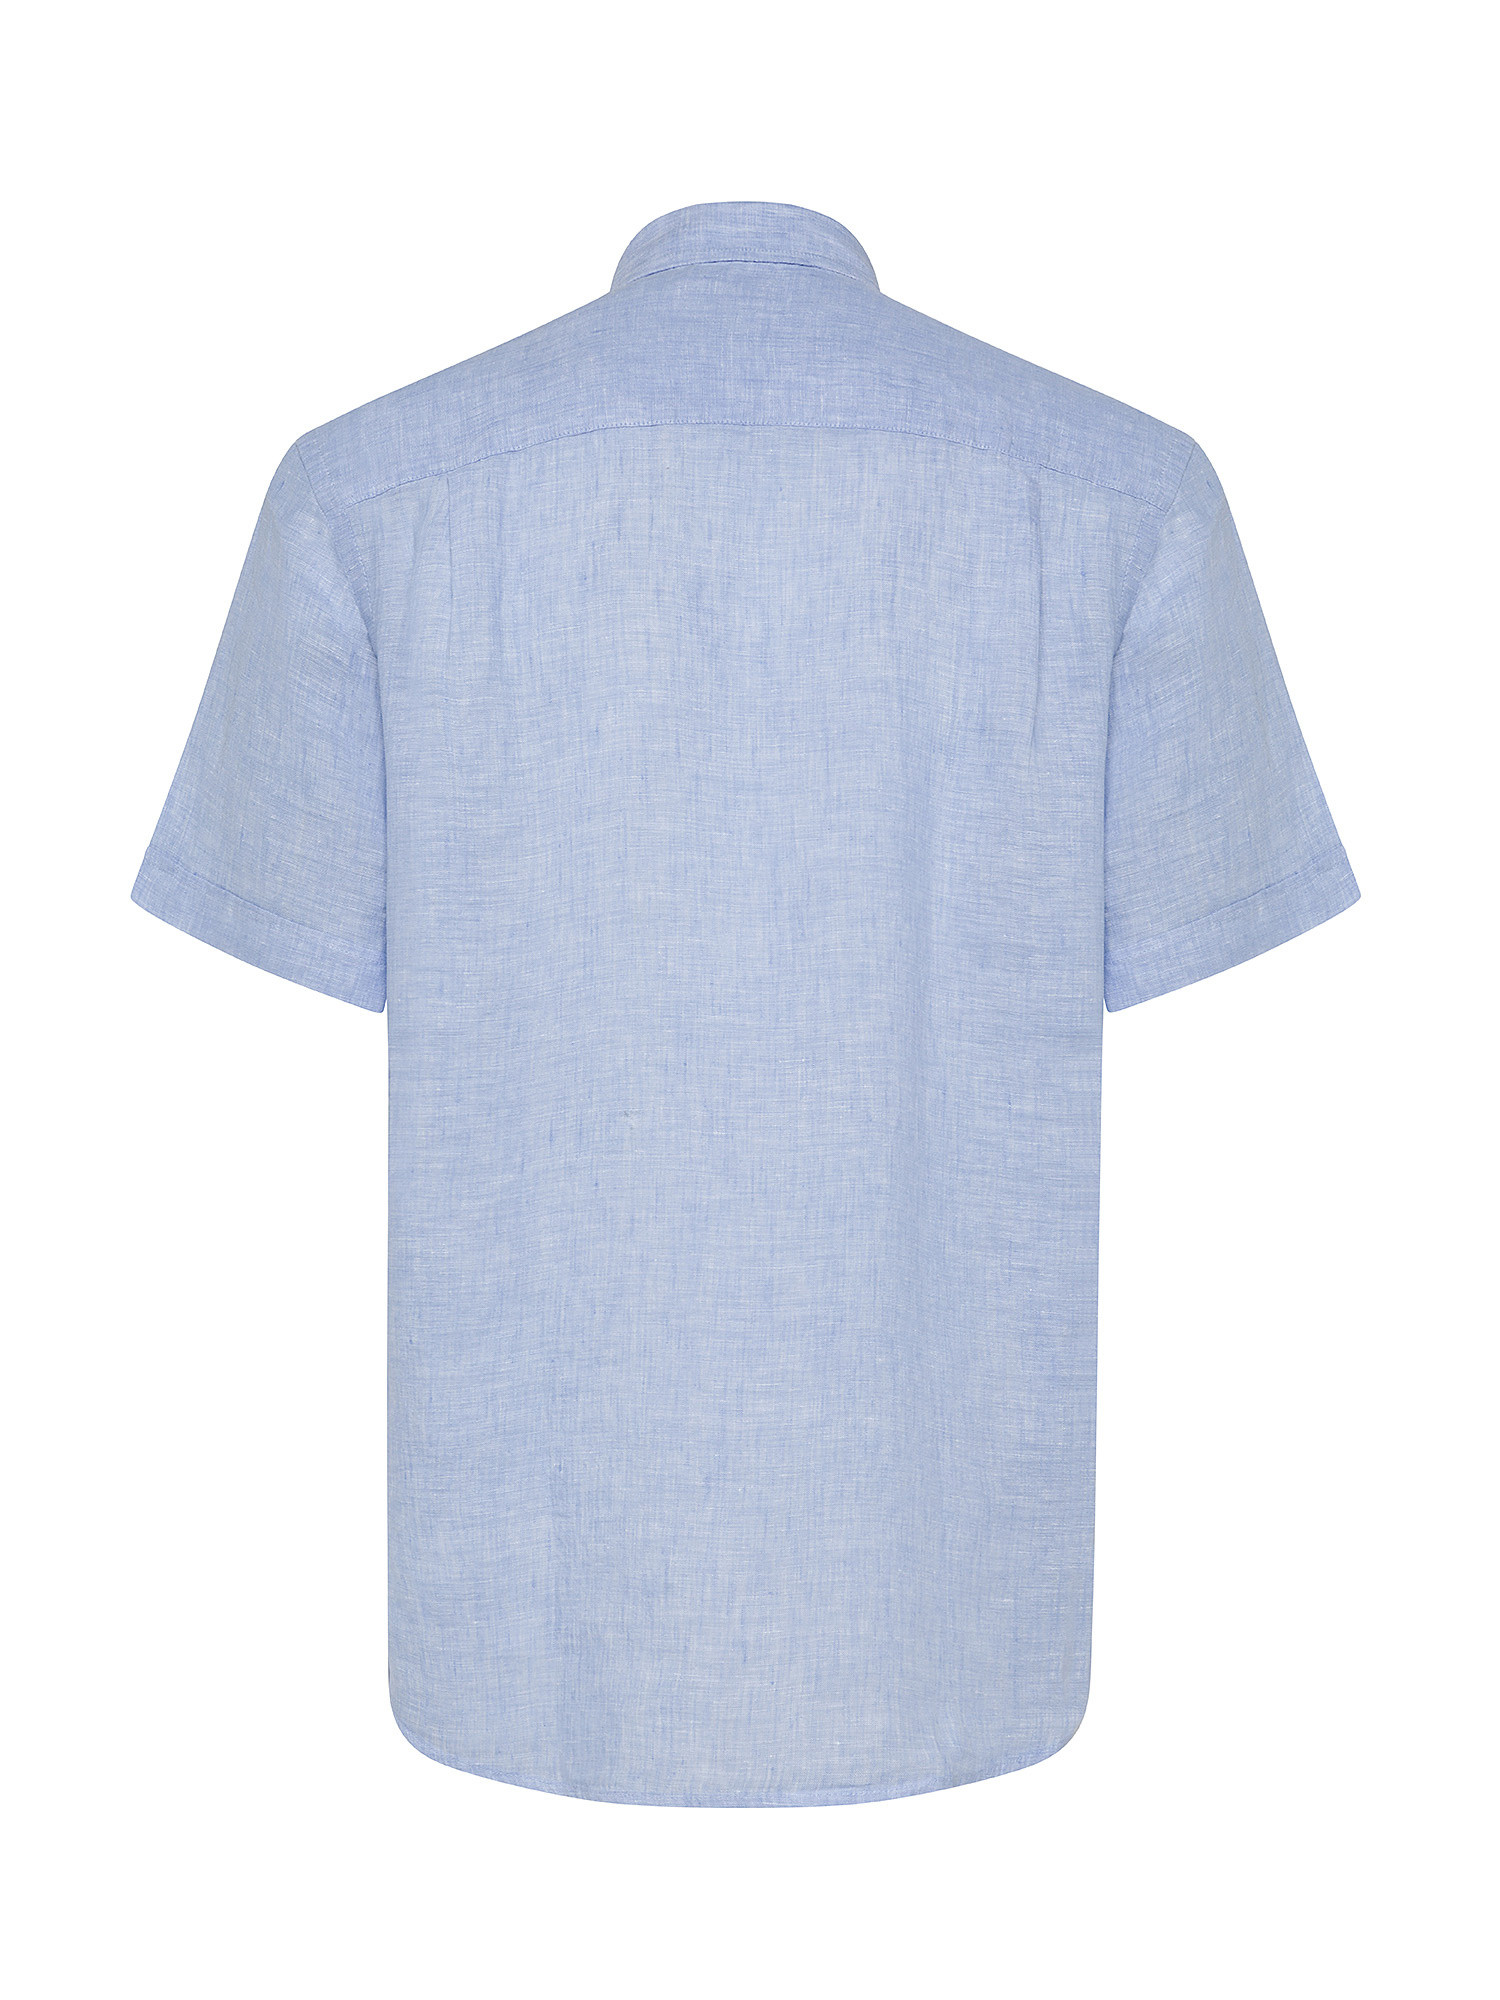 Luca D'Altieri - Camicia regular fit in puro lino, Azzurro, large image number 1